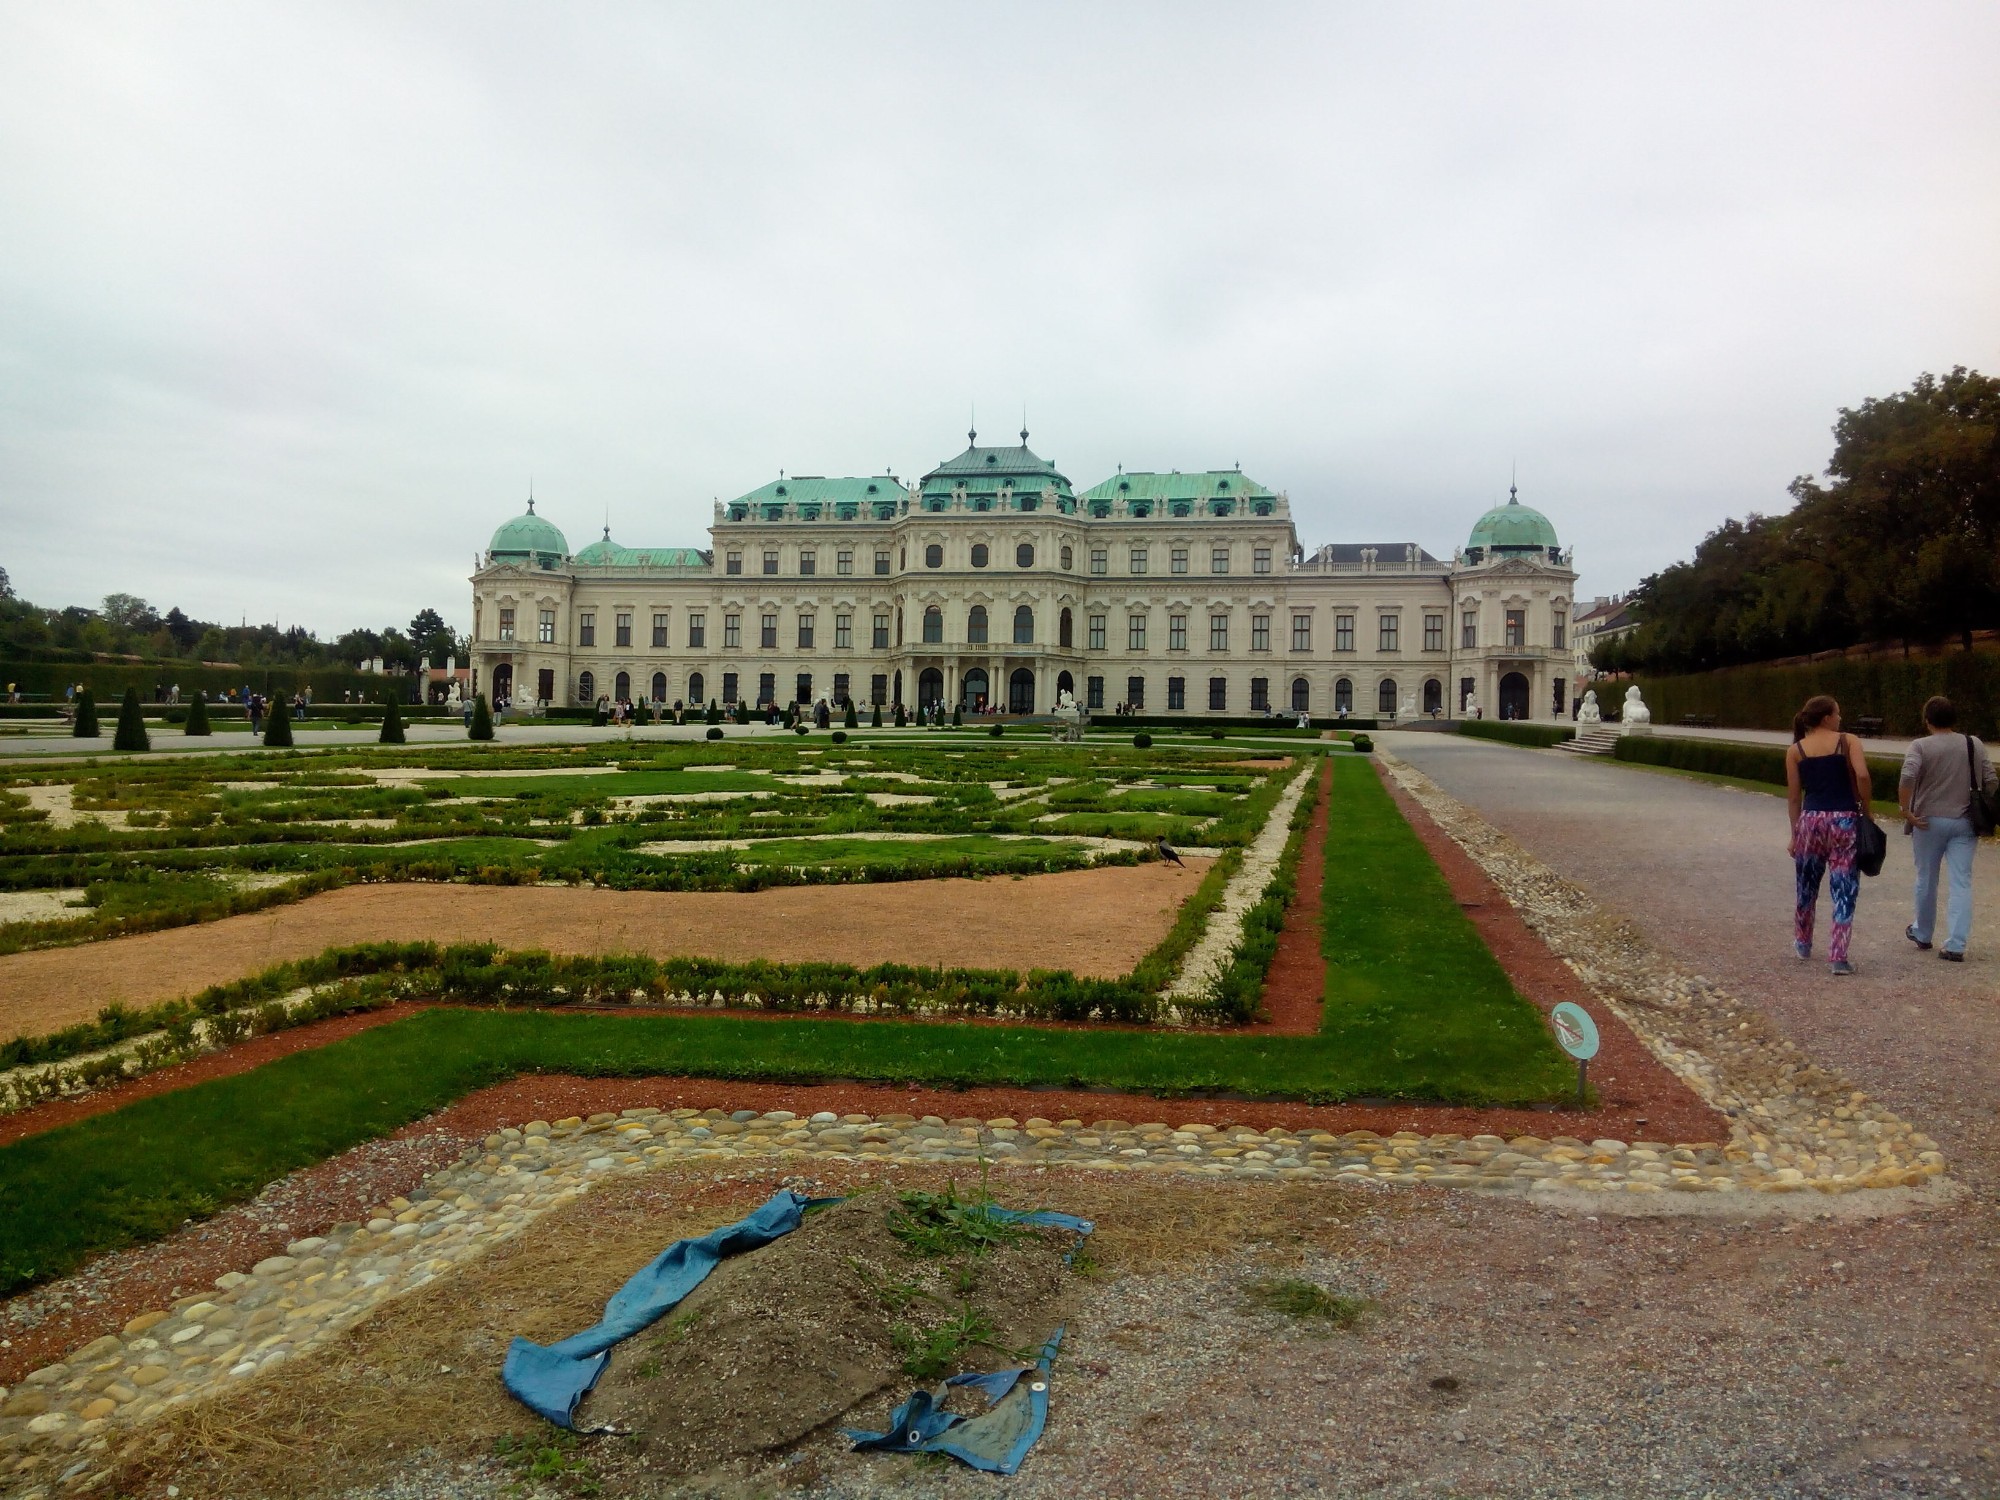 Belvedere Palace, Wien<br/> <br/>
August 2015